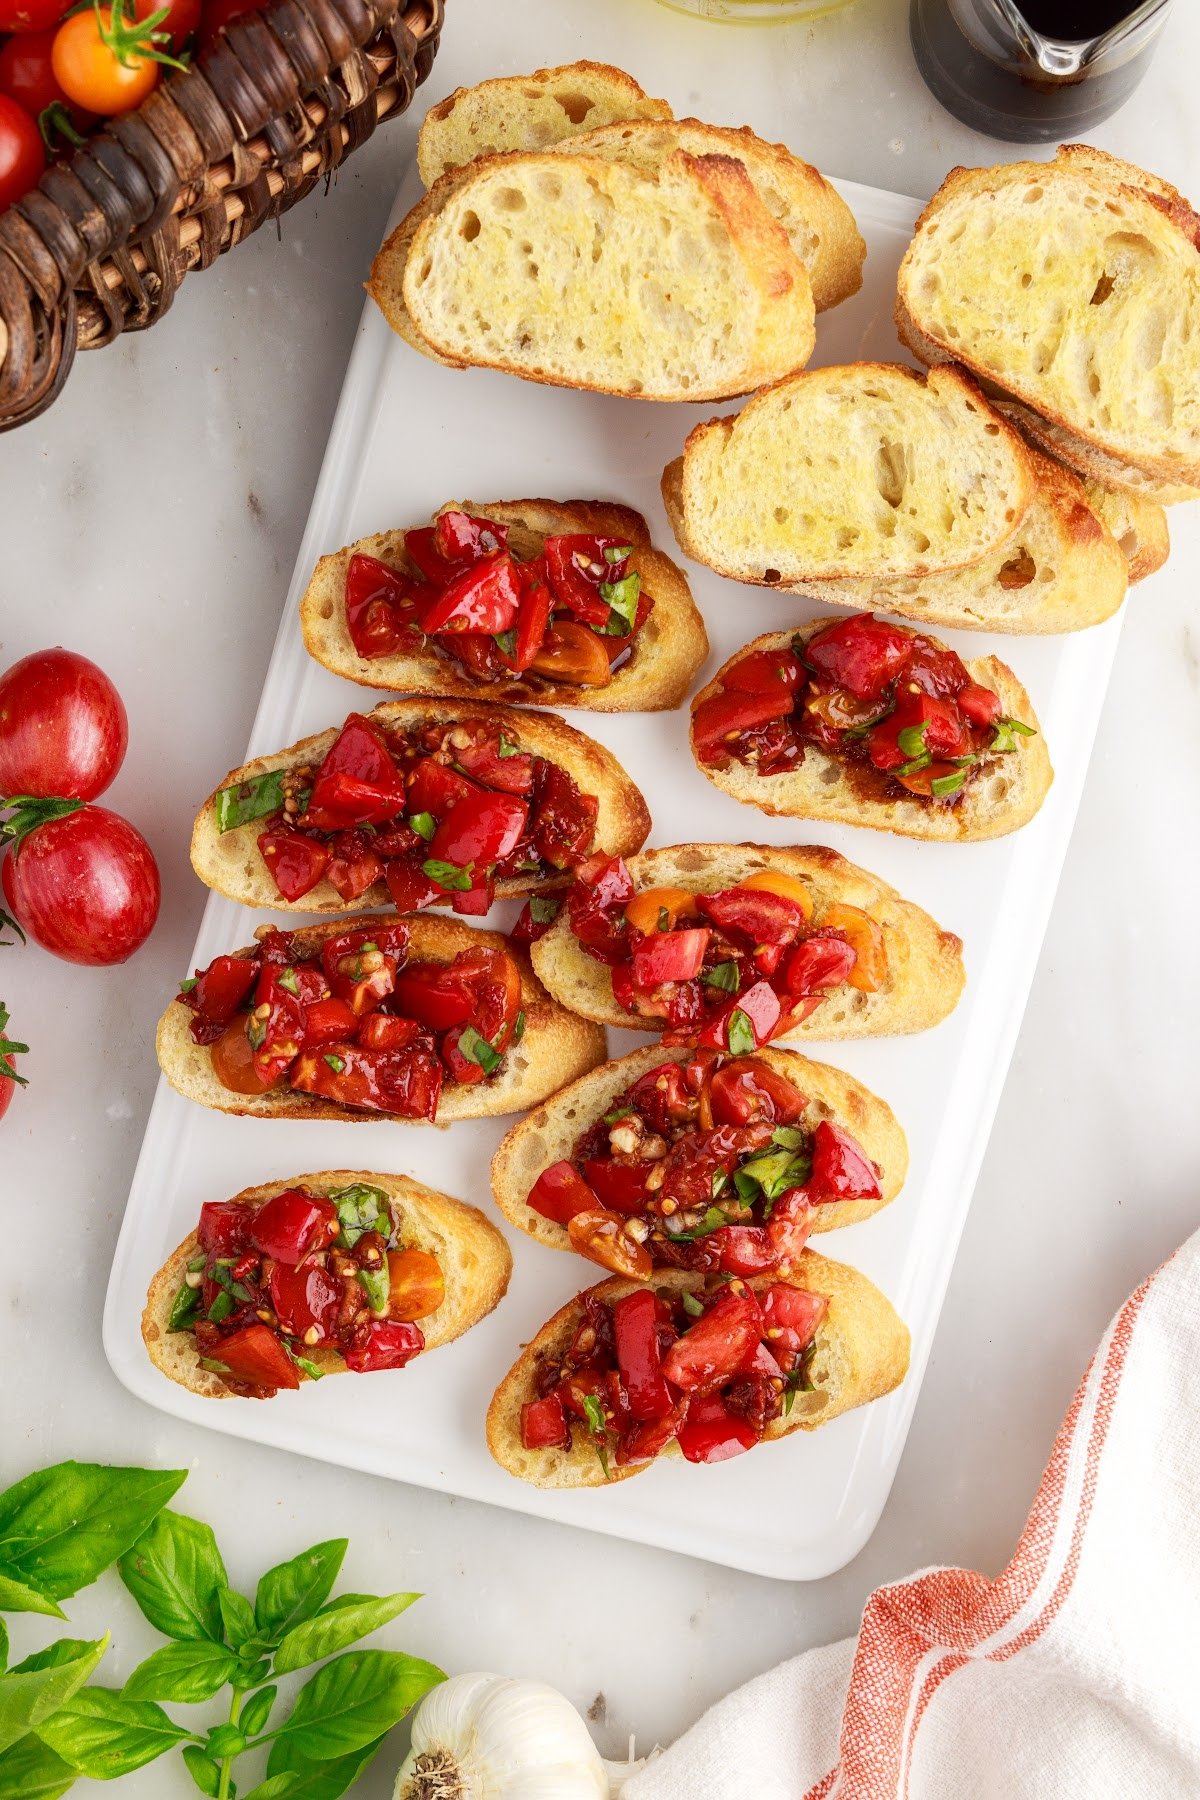 Sundried tomato bruschetta on a white serving platter next to bread slices.